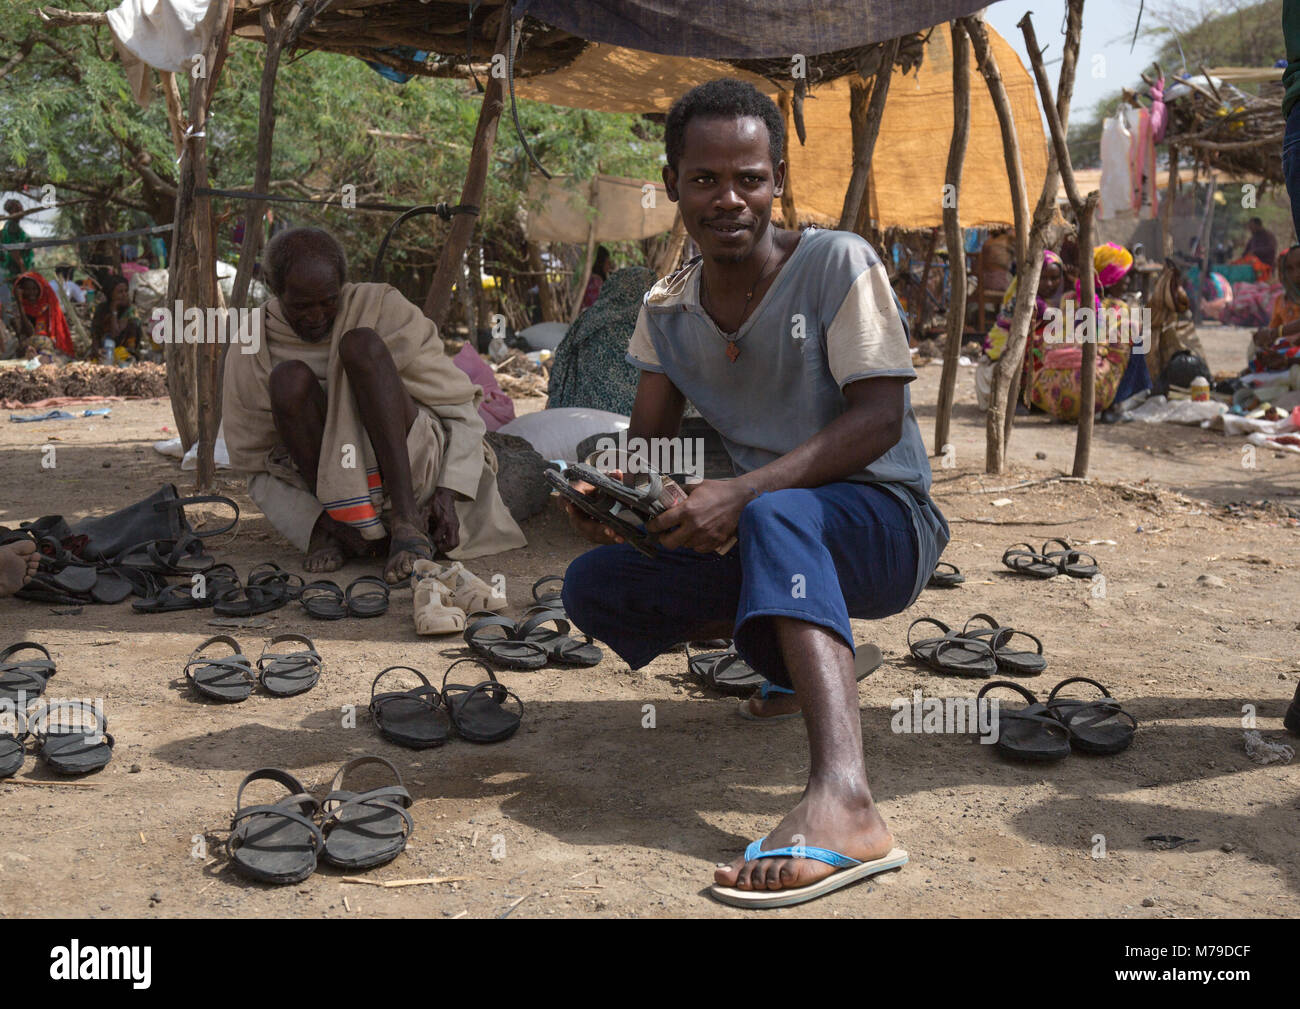 Ethiopia shoes -Fotos und -Bildmaterial in hoher Auflösung – Alamy